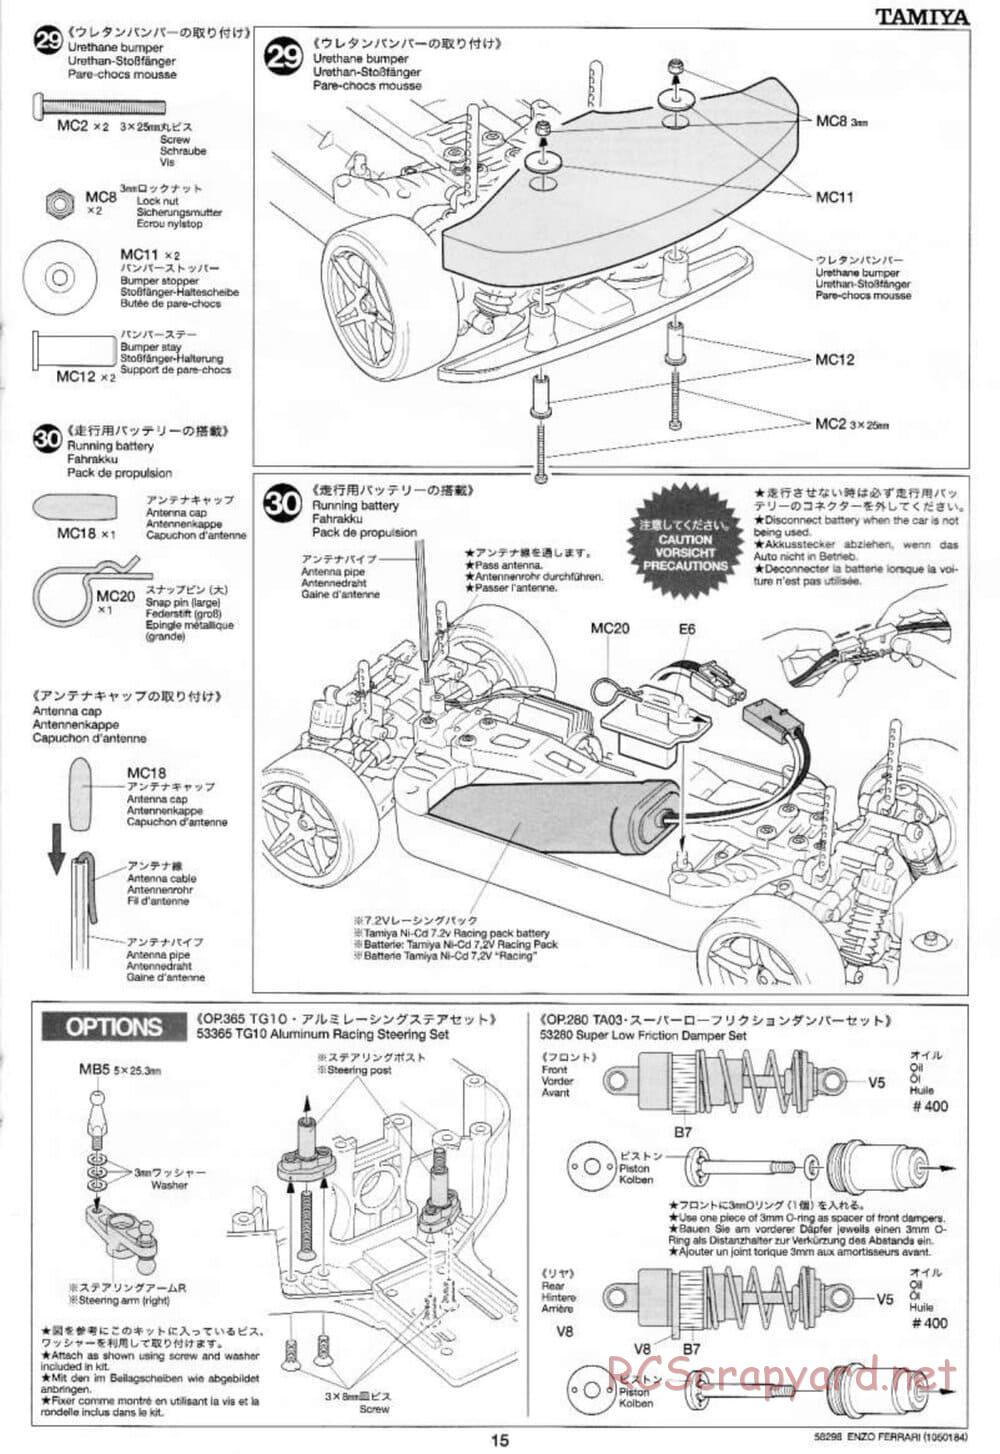 Tamiya - Enzo Ferrari - TB-01 Chassis - Manual - Page 15